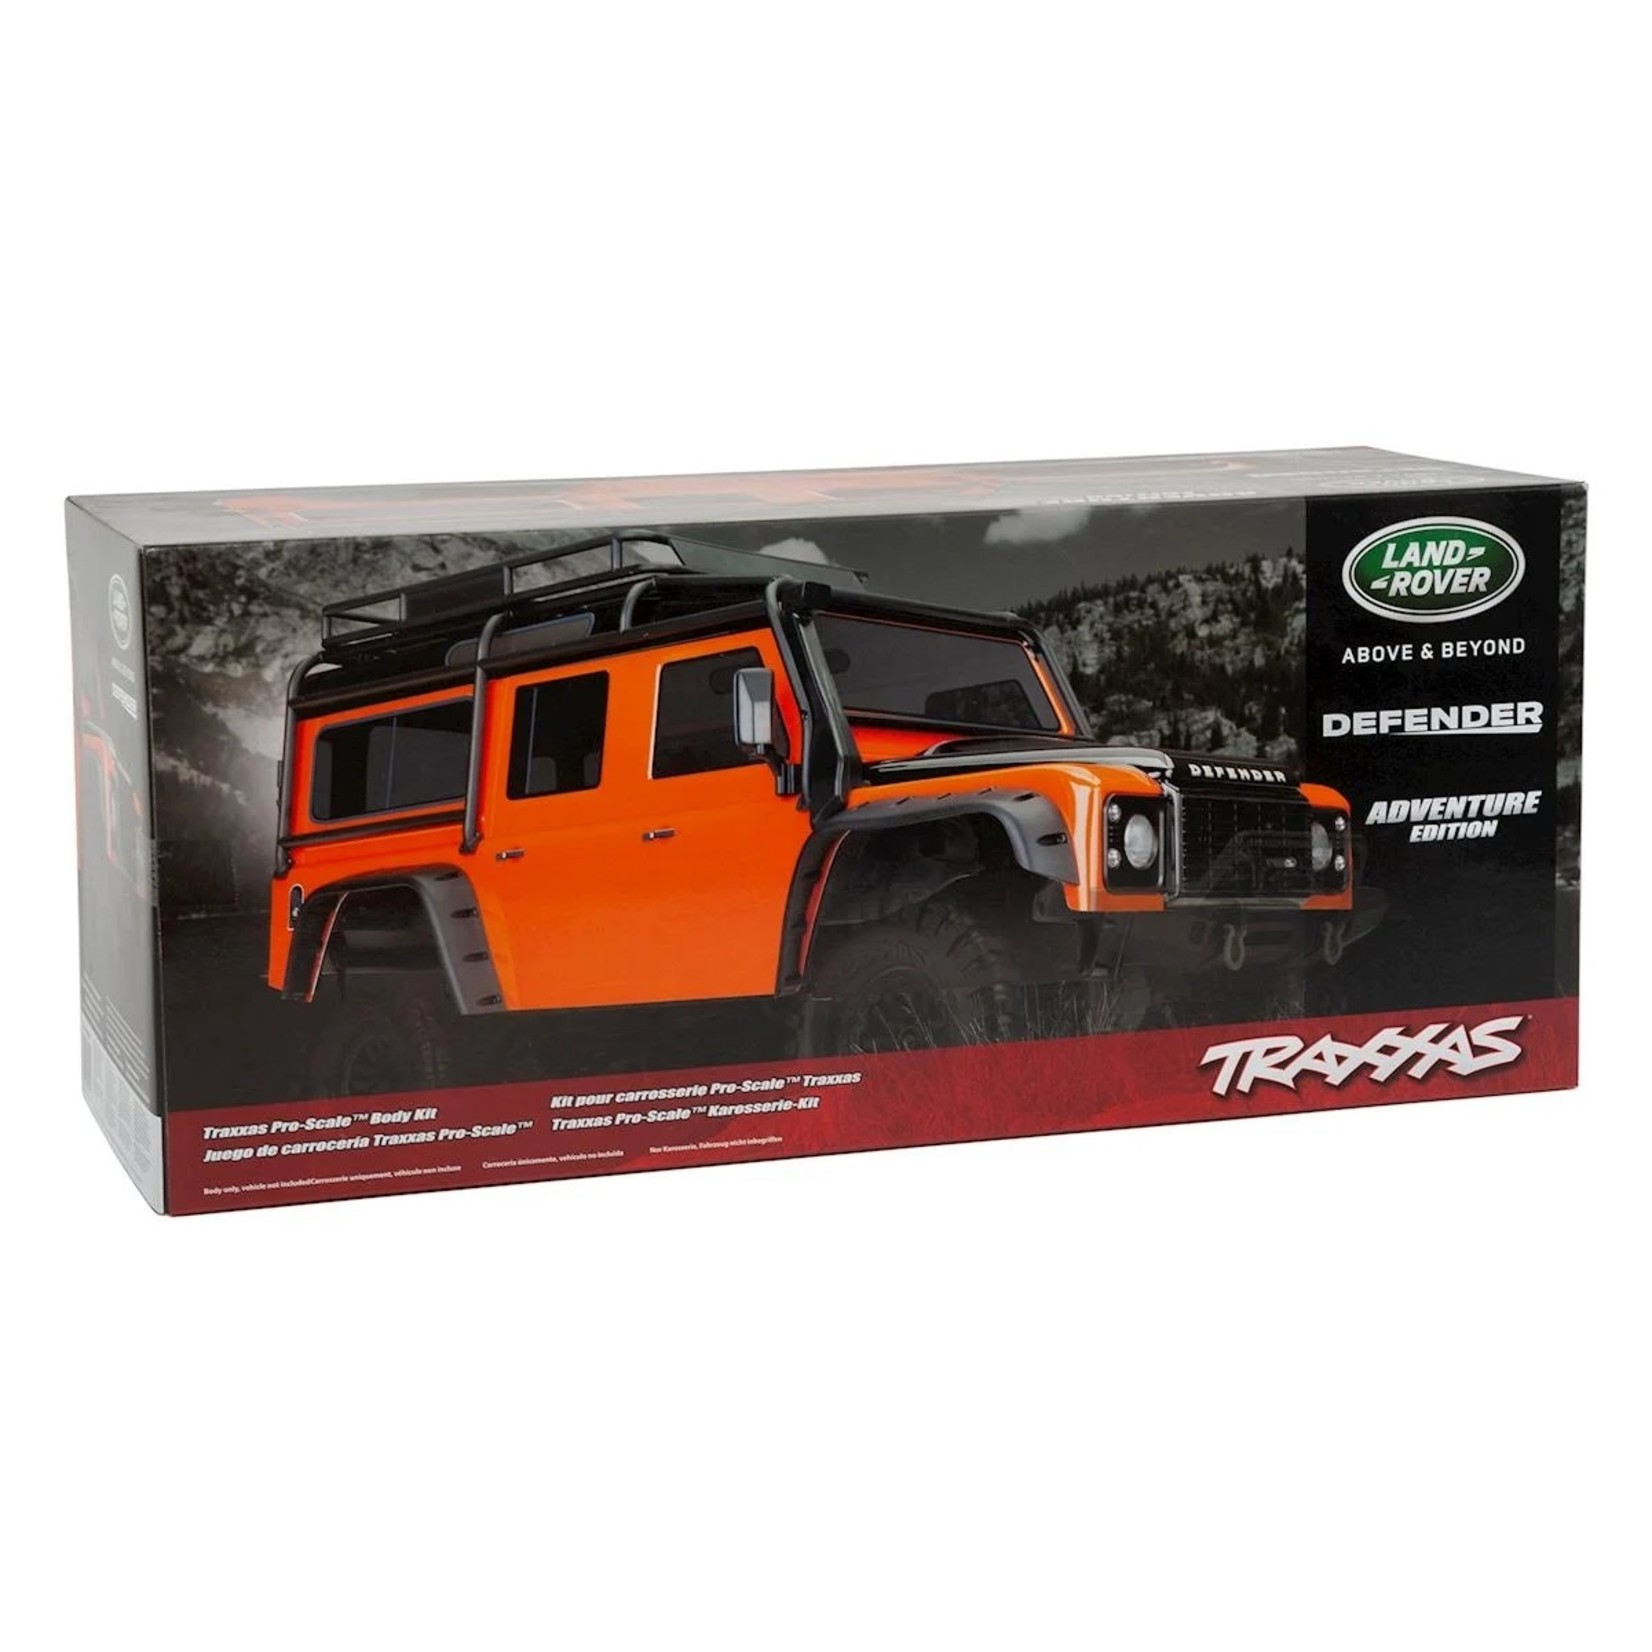 Traxxas Traxxas TRX-4 Land Rover Defender Pre-Painted Body w/Exocage (Orange) #8011A